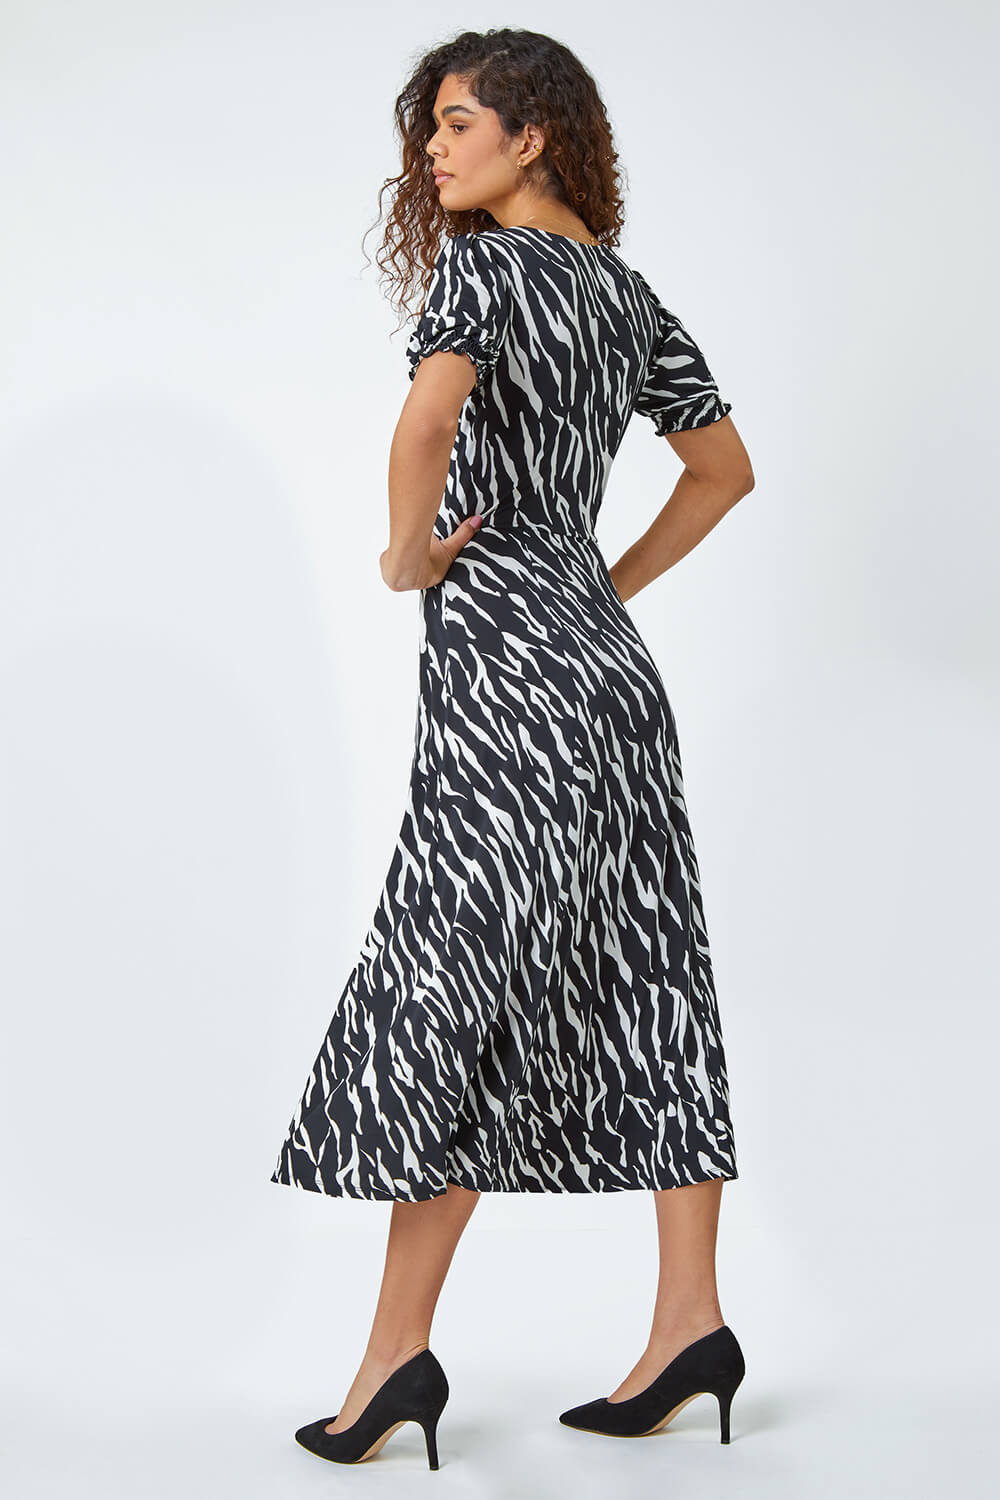 Black Zebra Print Stretch Ruched Midi Dress, Image 3 of 5